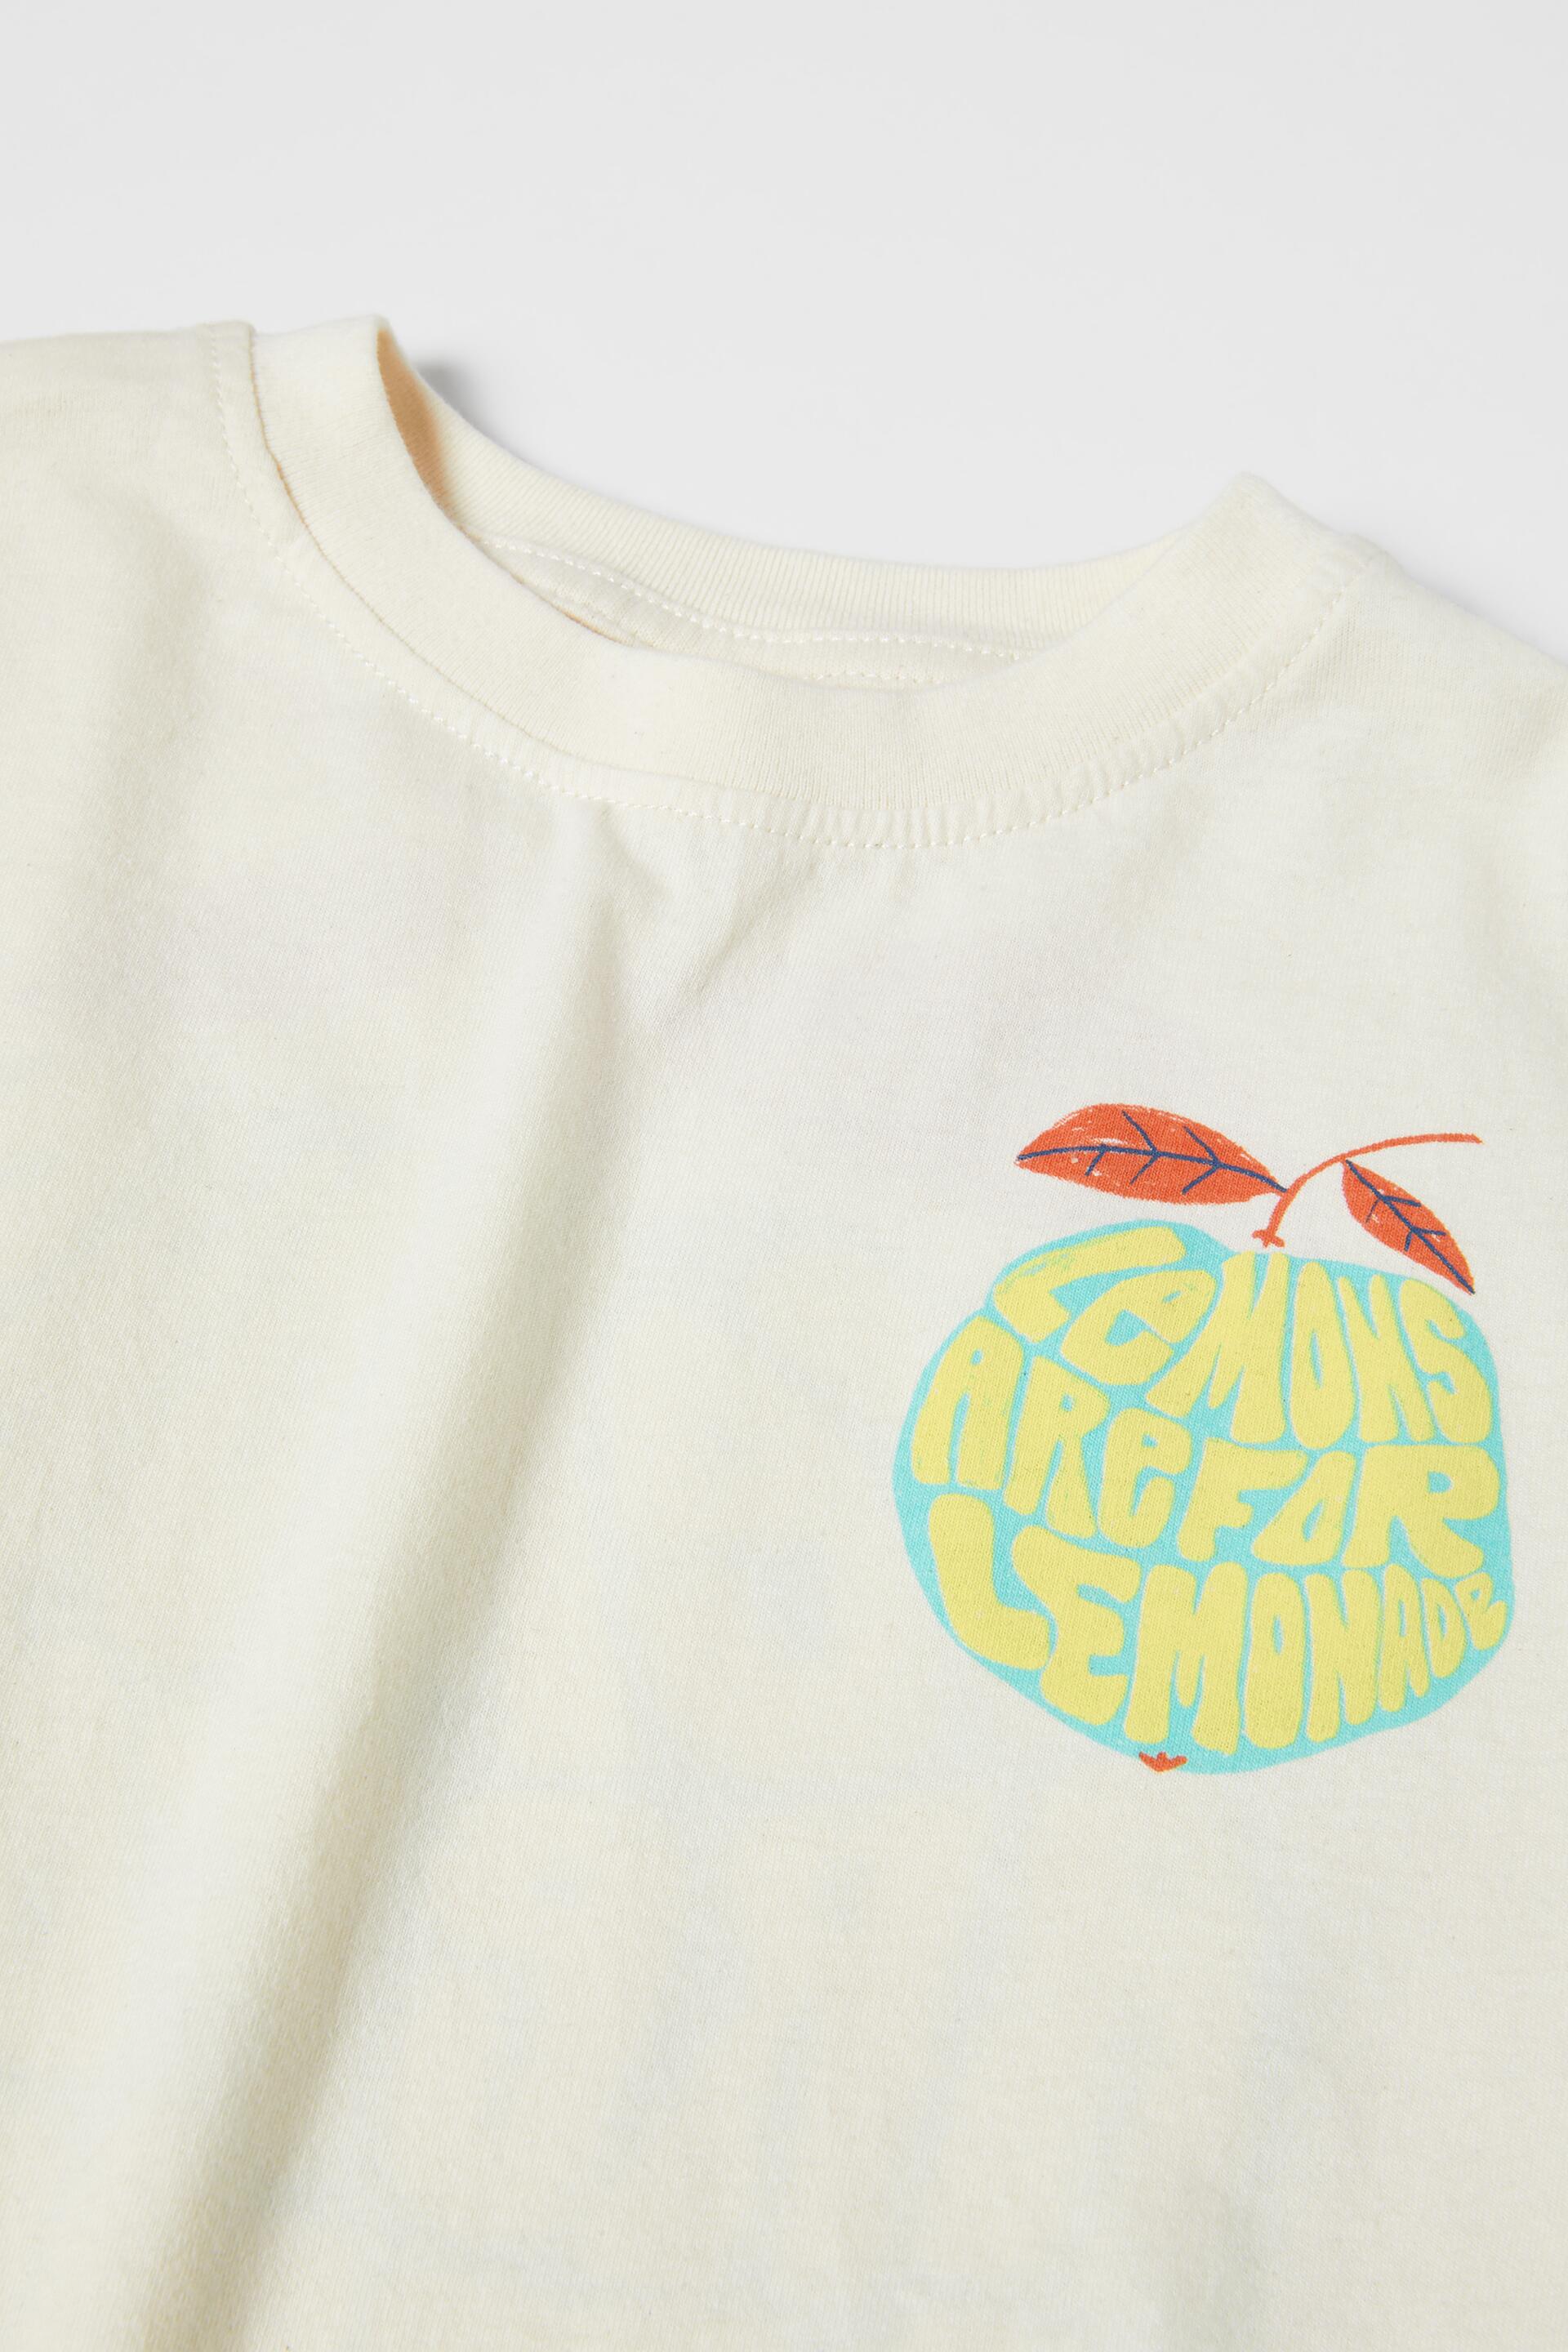 Zara Lemon Text T-Shirt - Big Apple Buddy